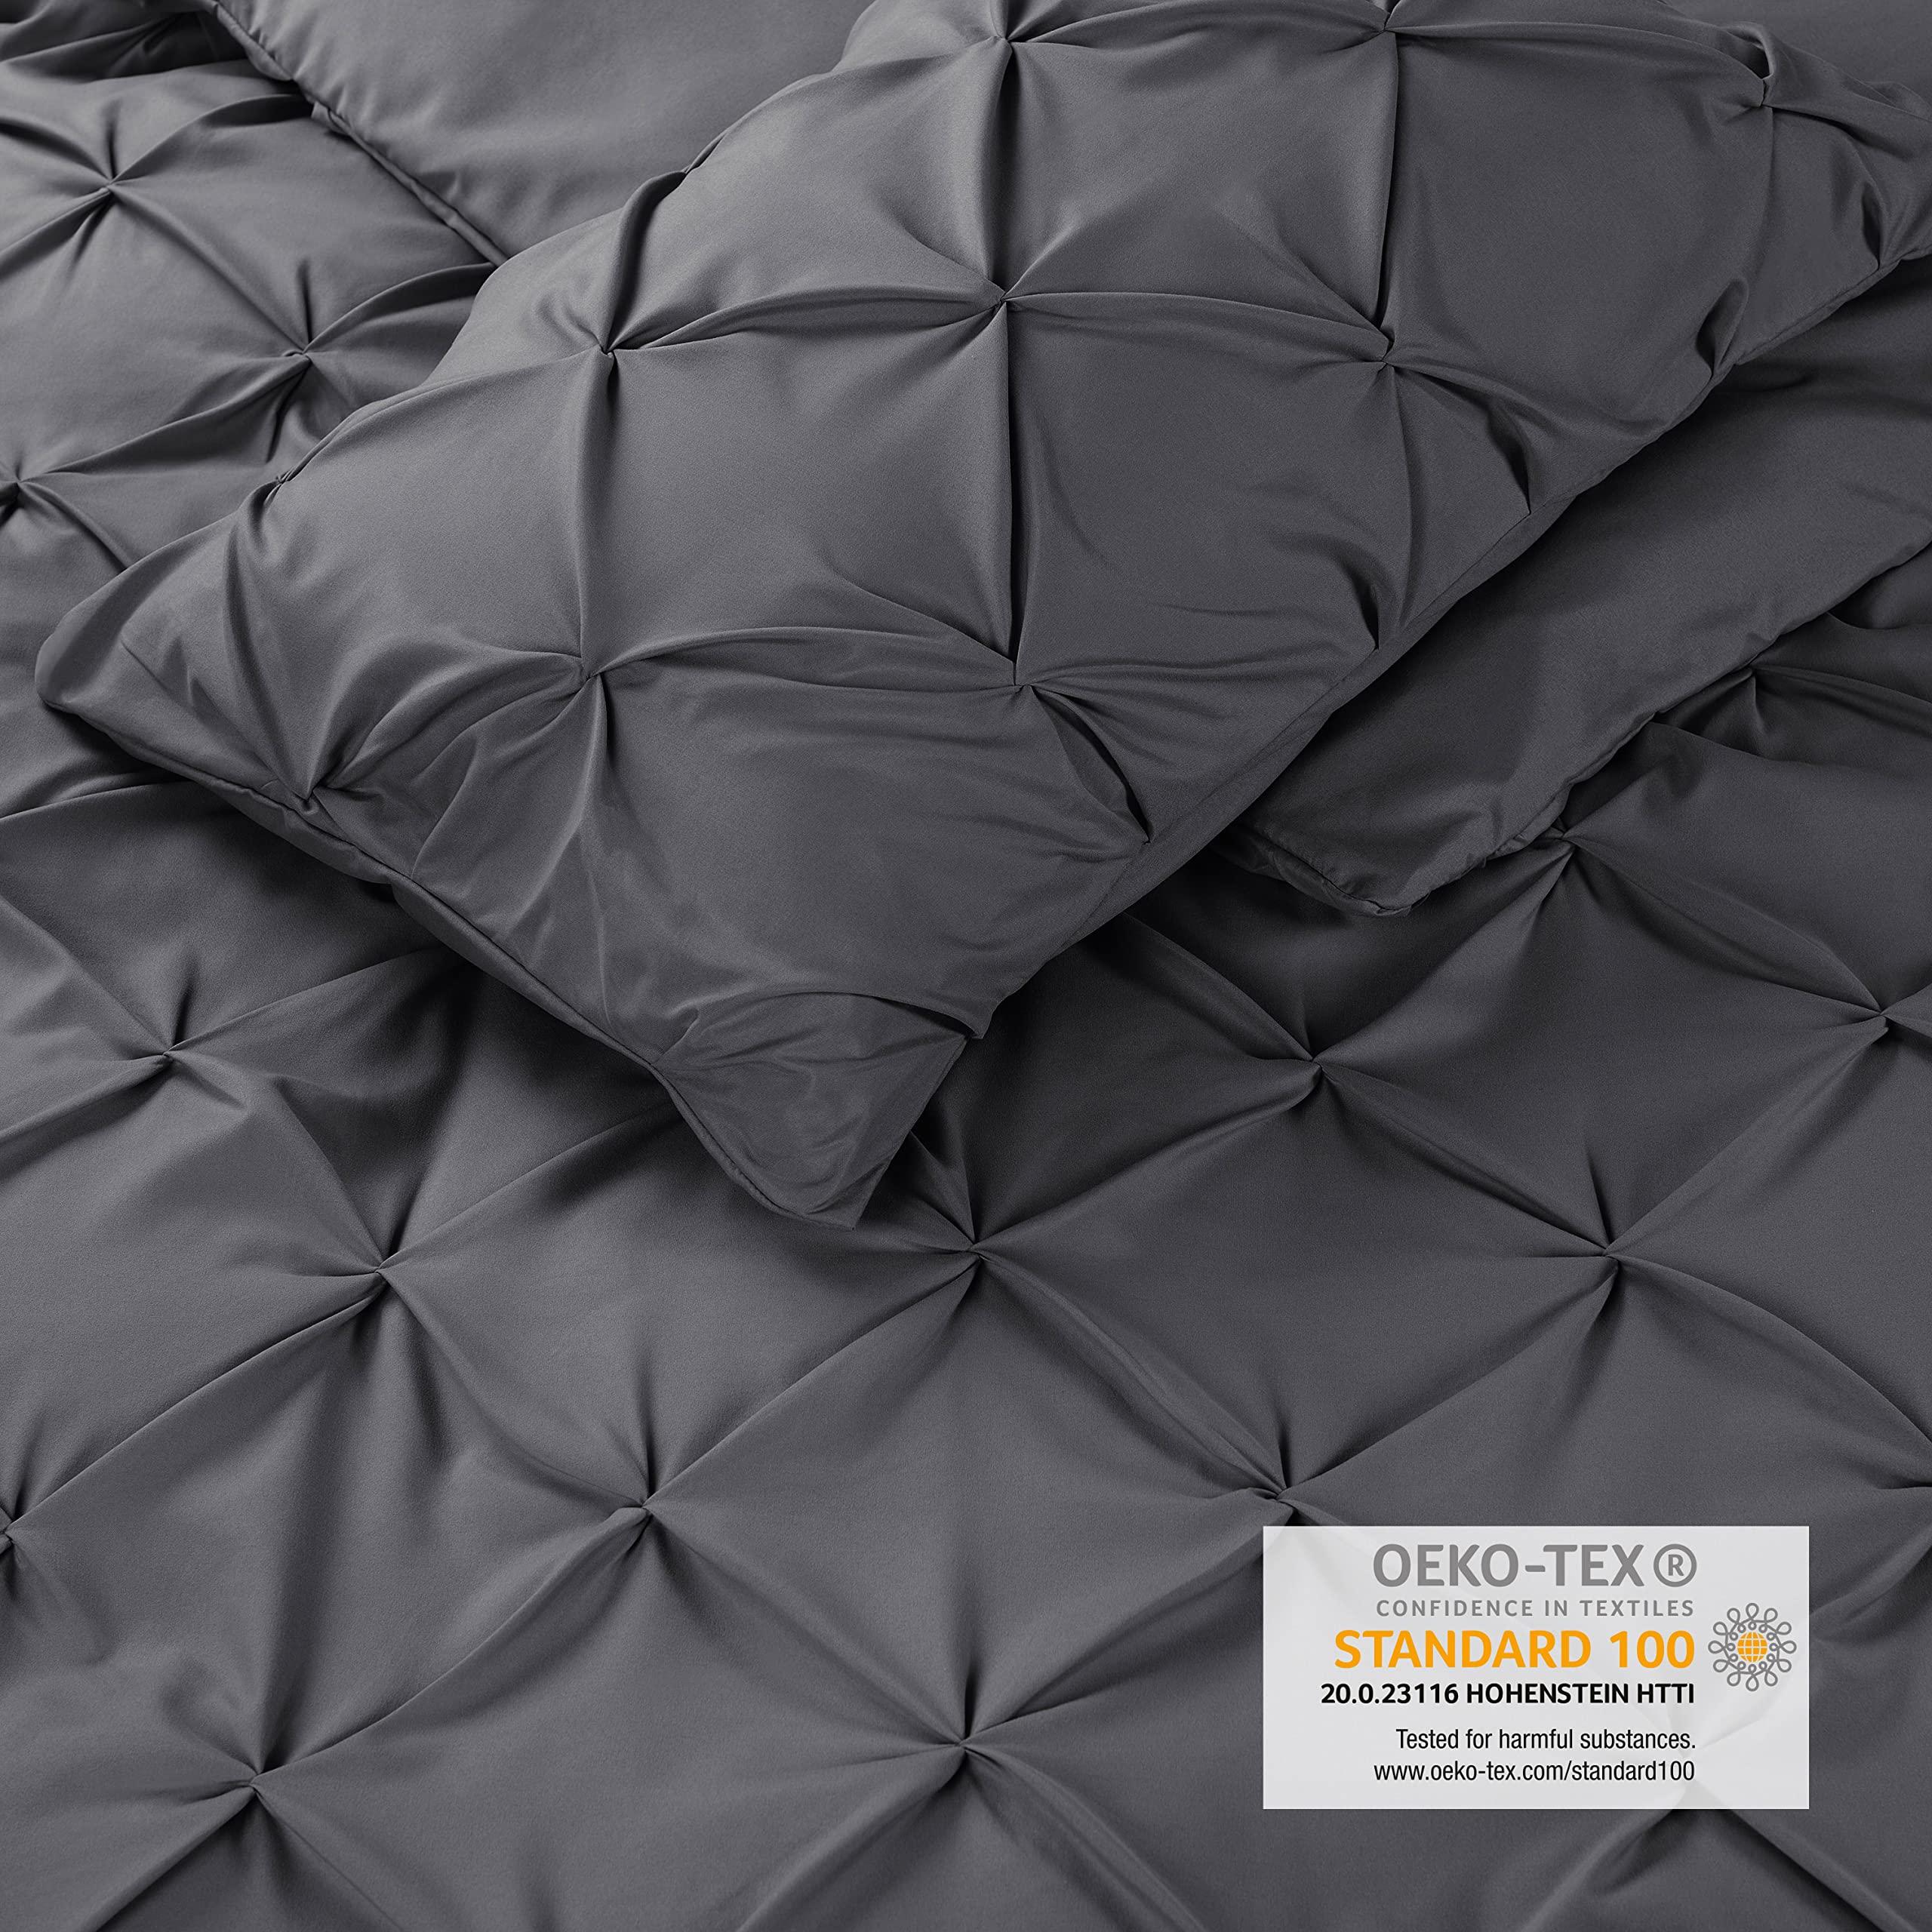 Blumtal® Luxury Duvet Cover Set Pinch Pleat, UltraSoft Super King Bedding with Beautiful Tucks, 260 x 220 & 50 x 75 cm (2x), Pintuck Bedding, Anthracite 2